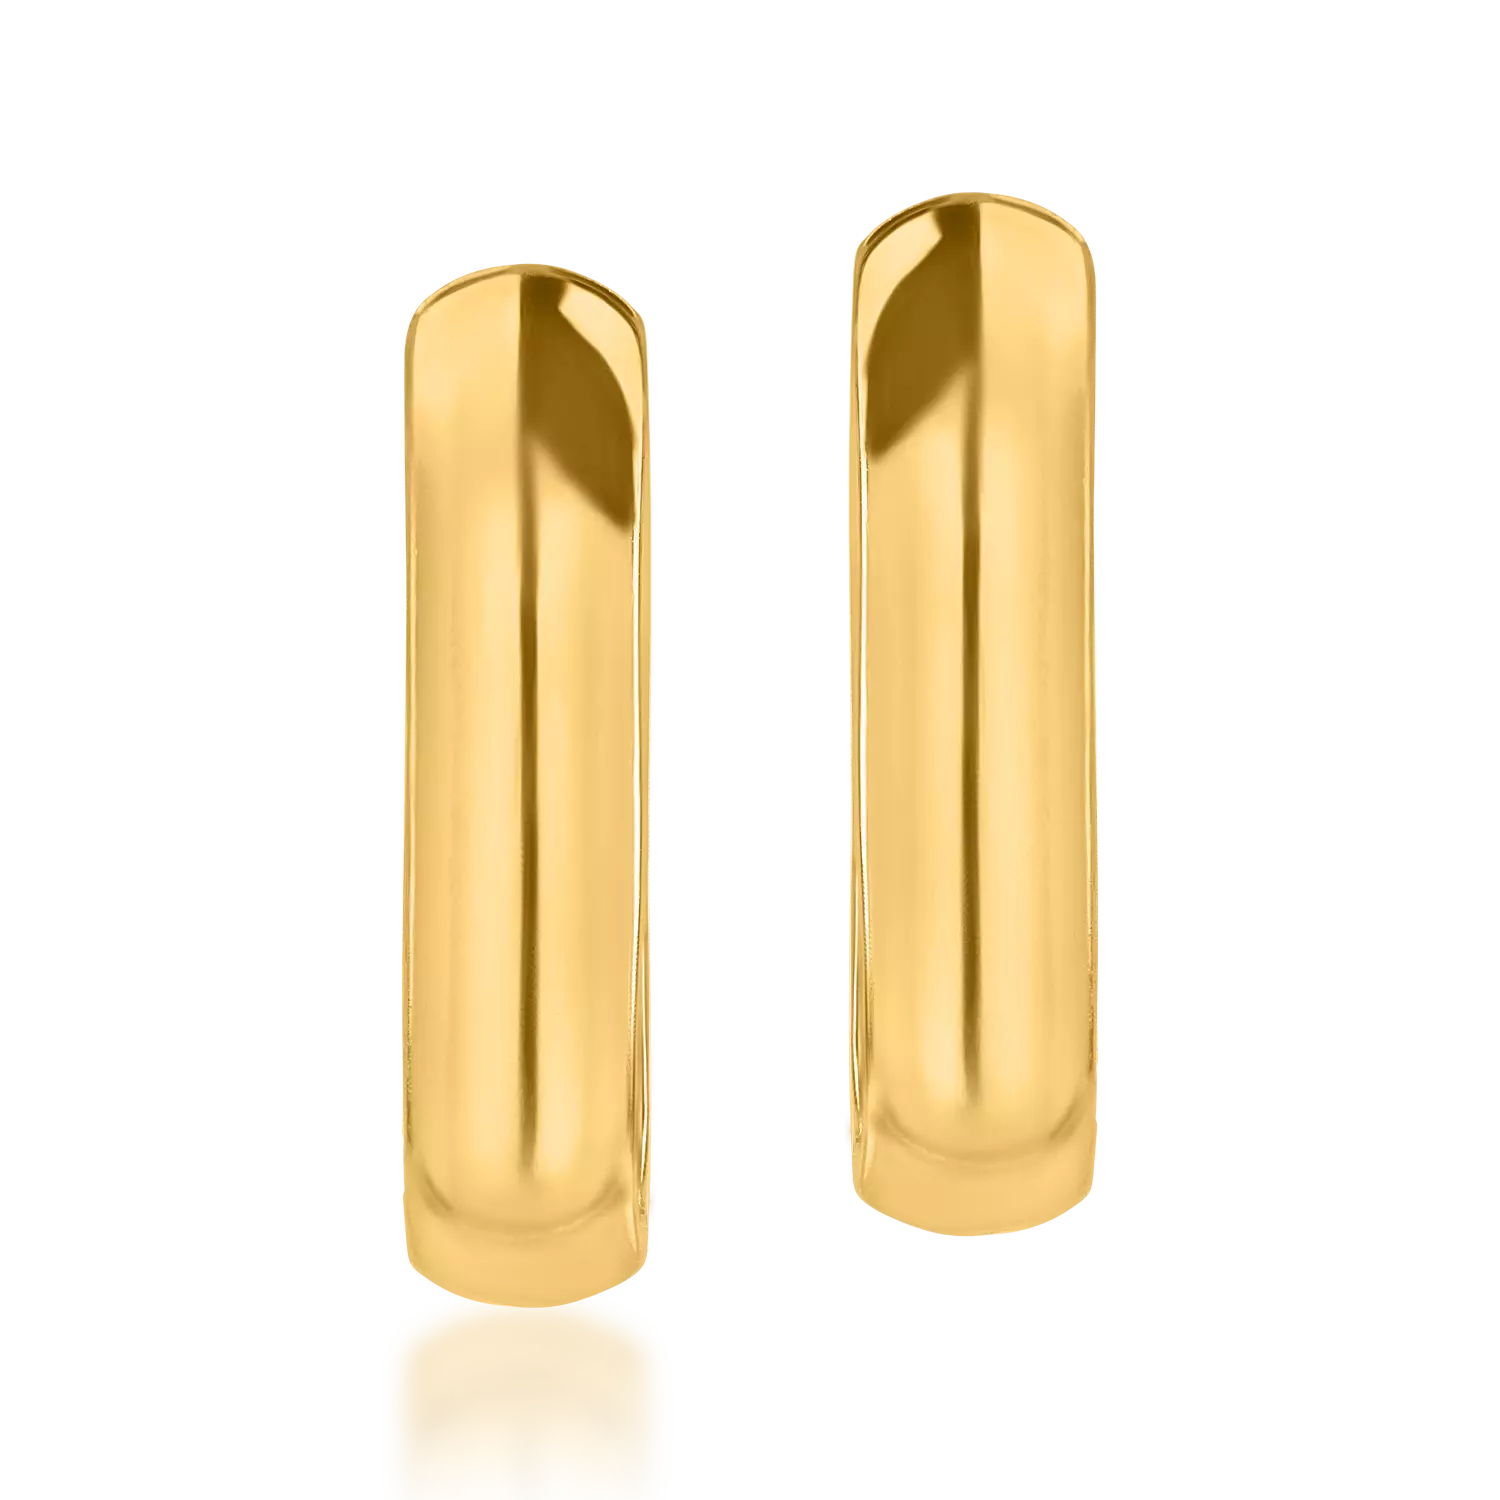 Yellow gold oval earrings